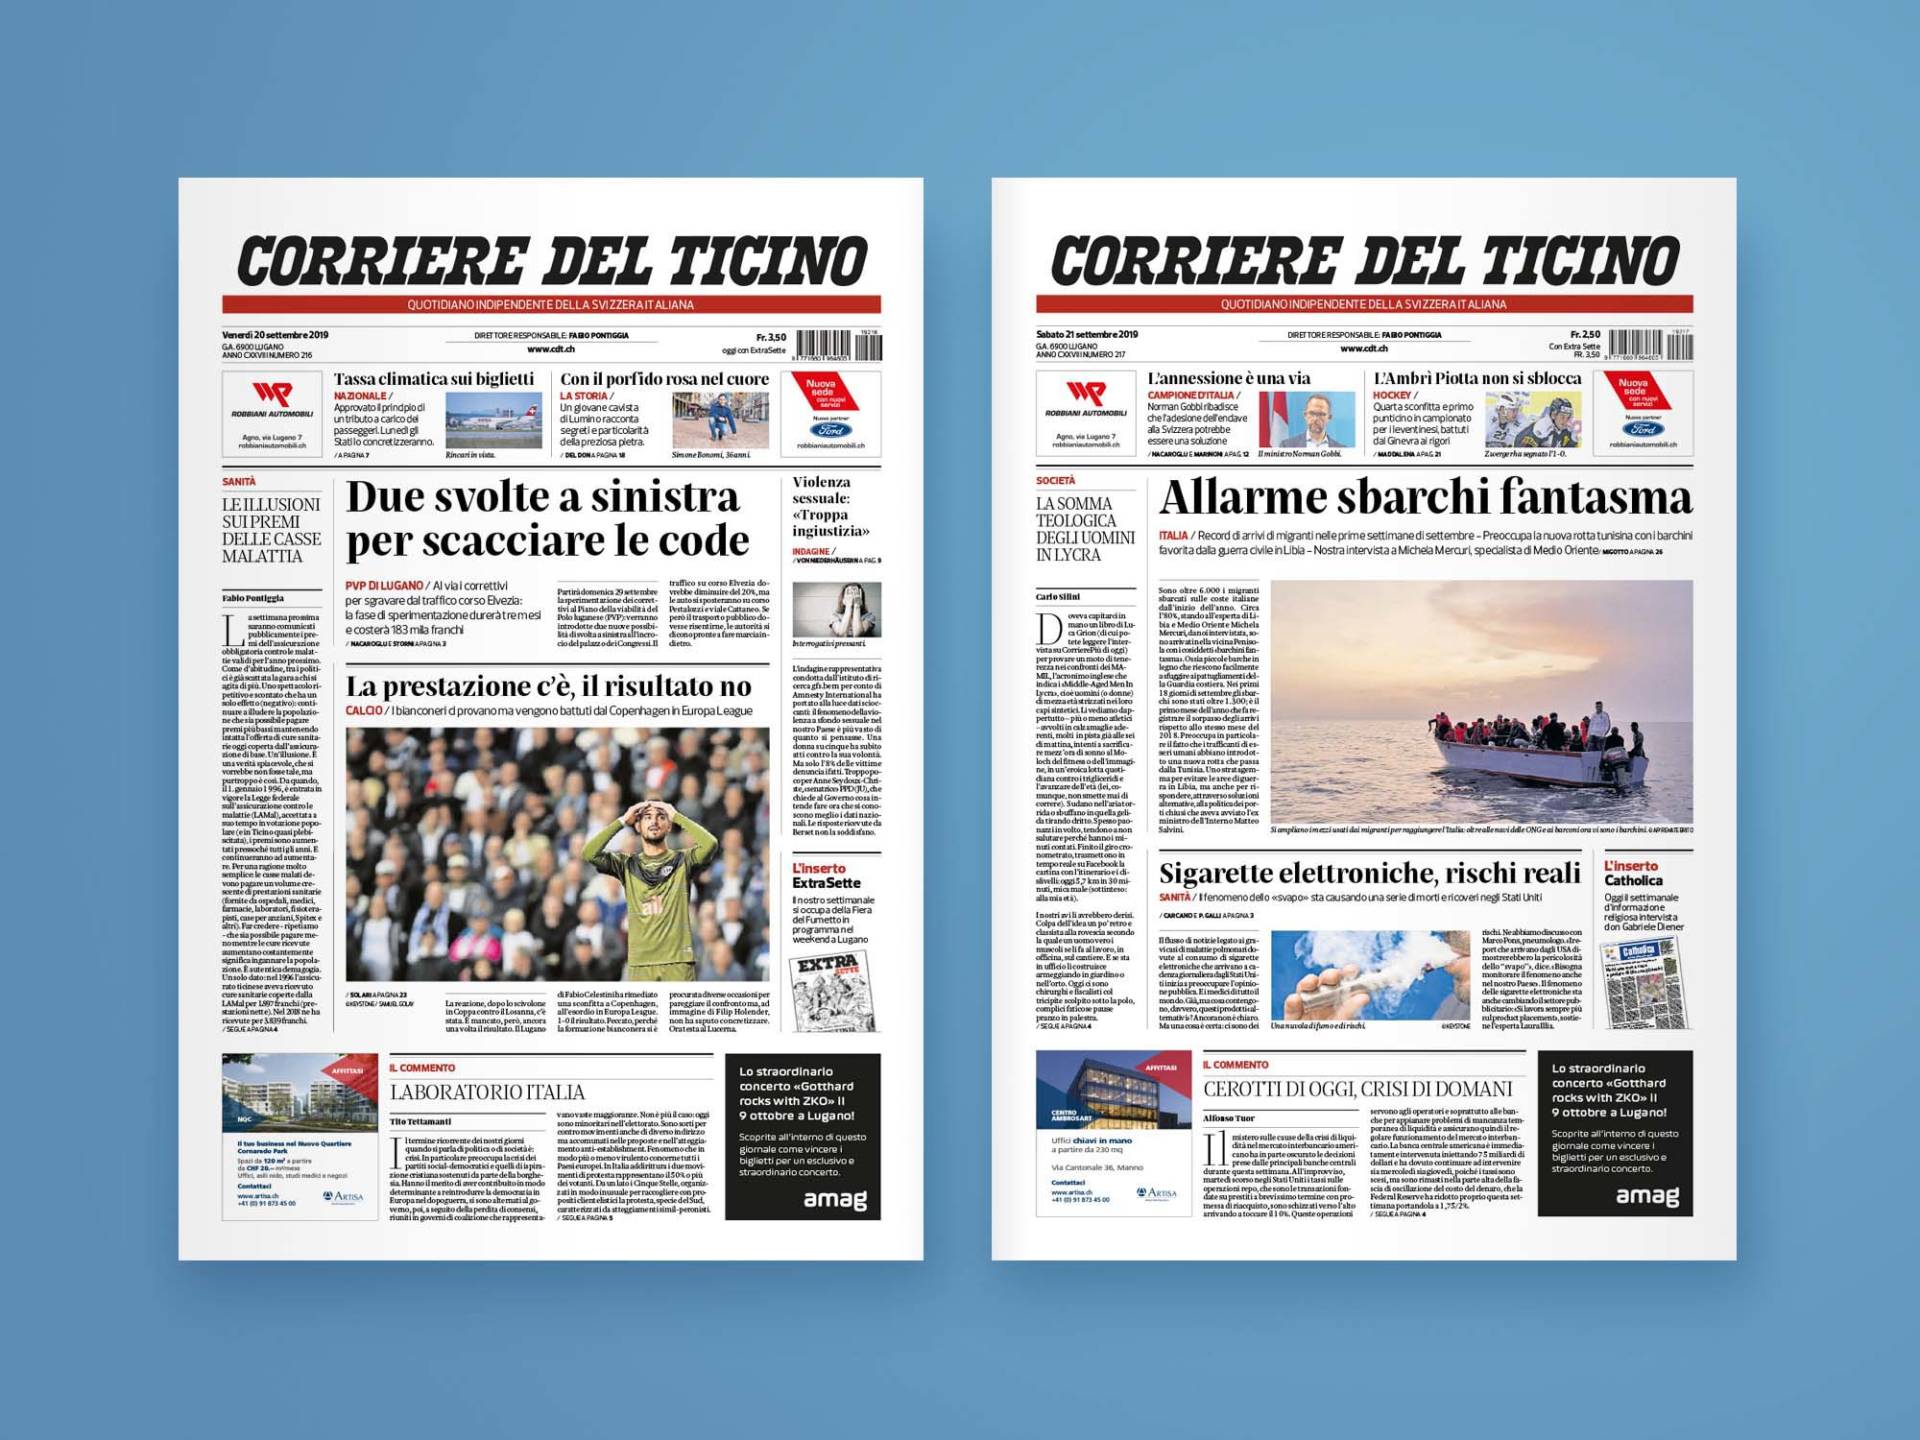 Corriere_Del_Ticino_02_Wenceslau_News_Design